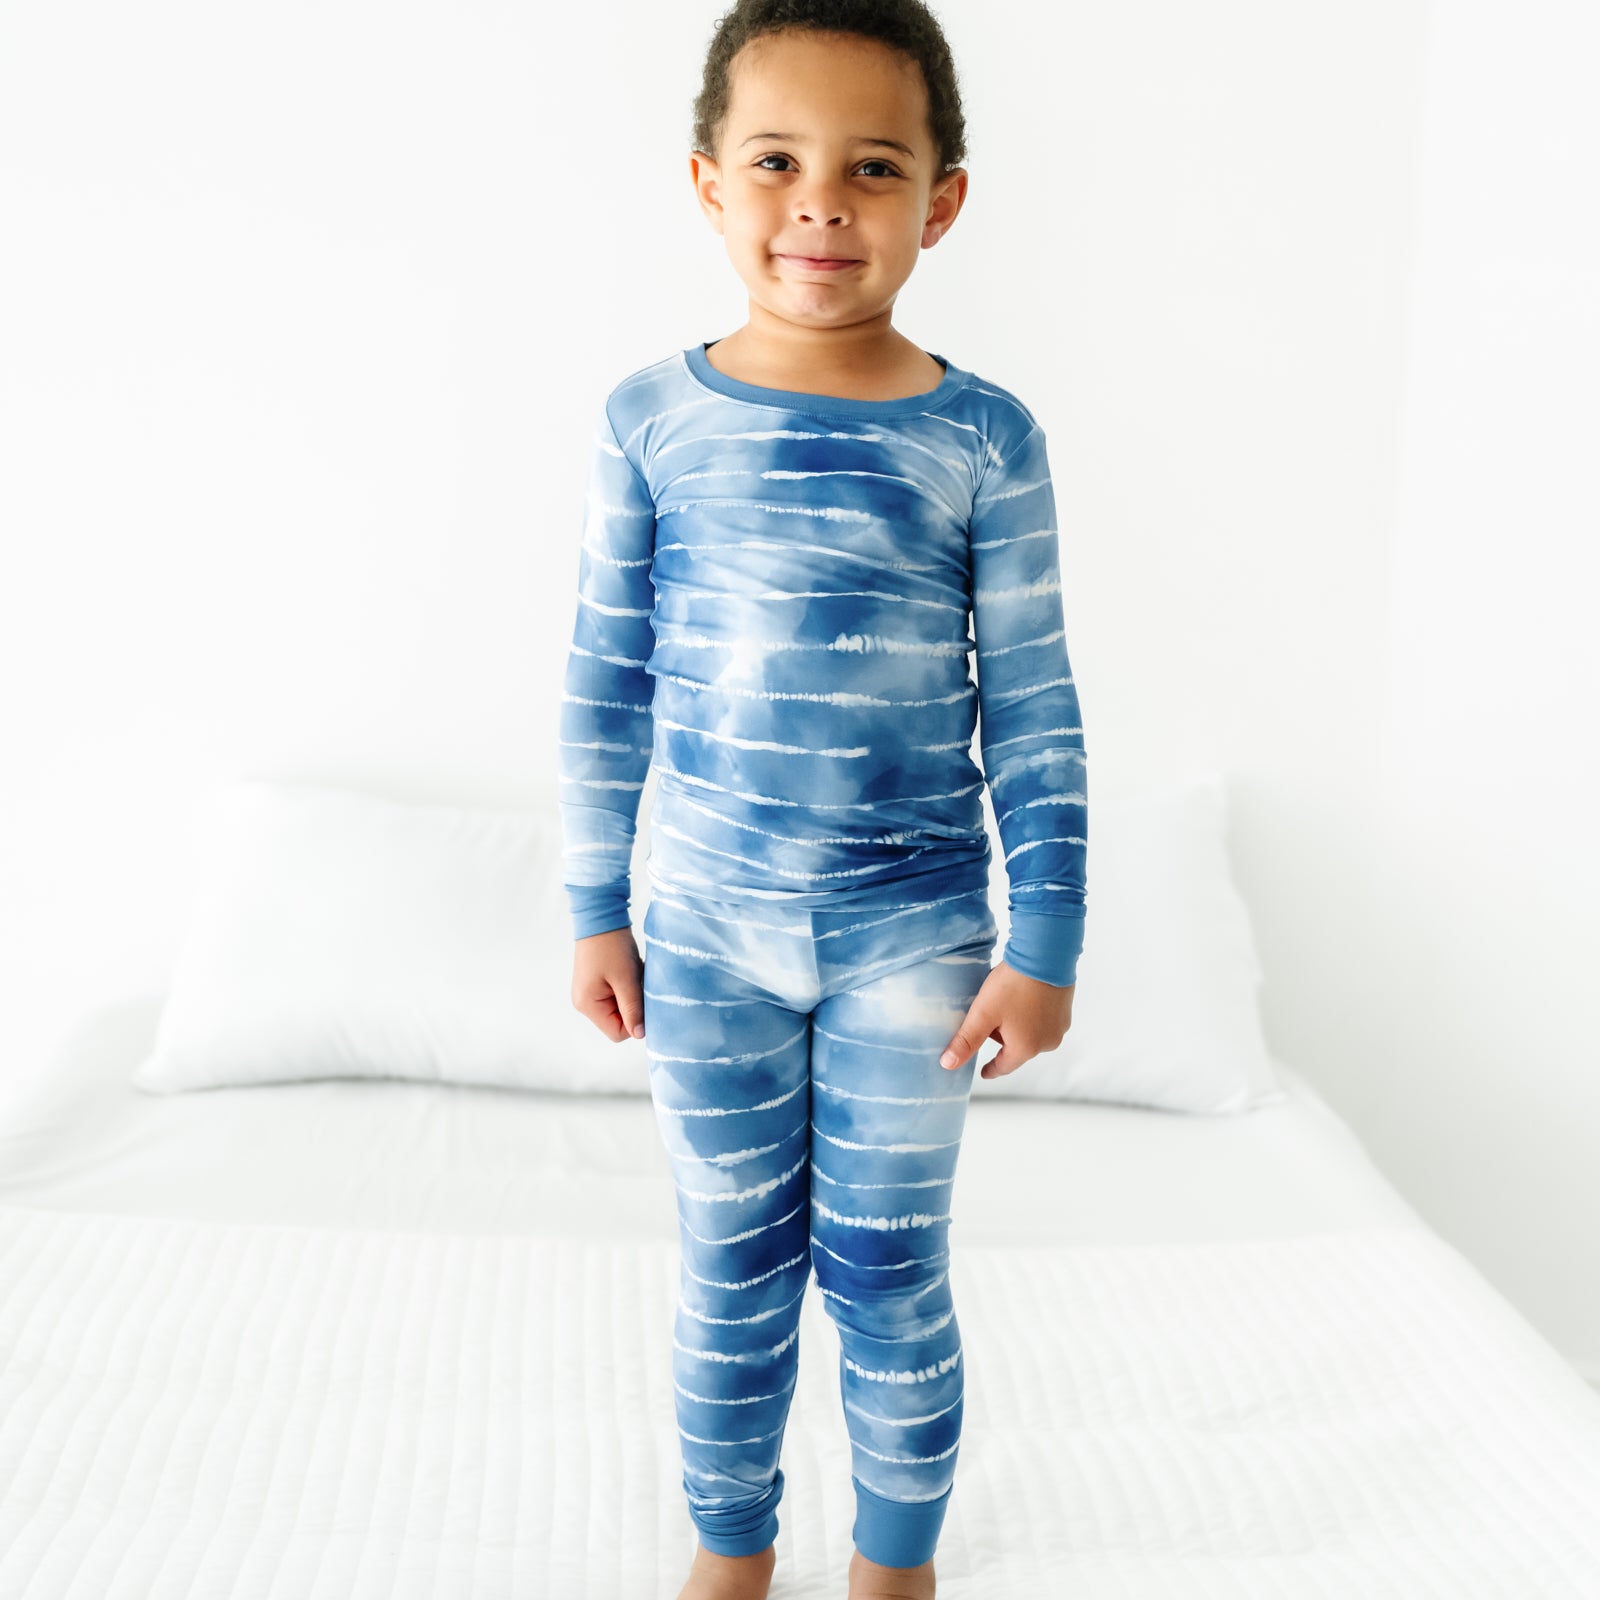 Child wearing a Blue Tie Dye Dreams two-piece pajama set